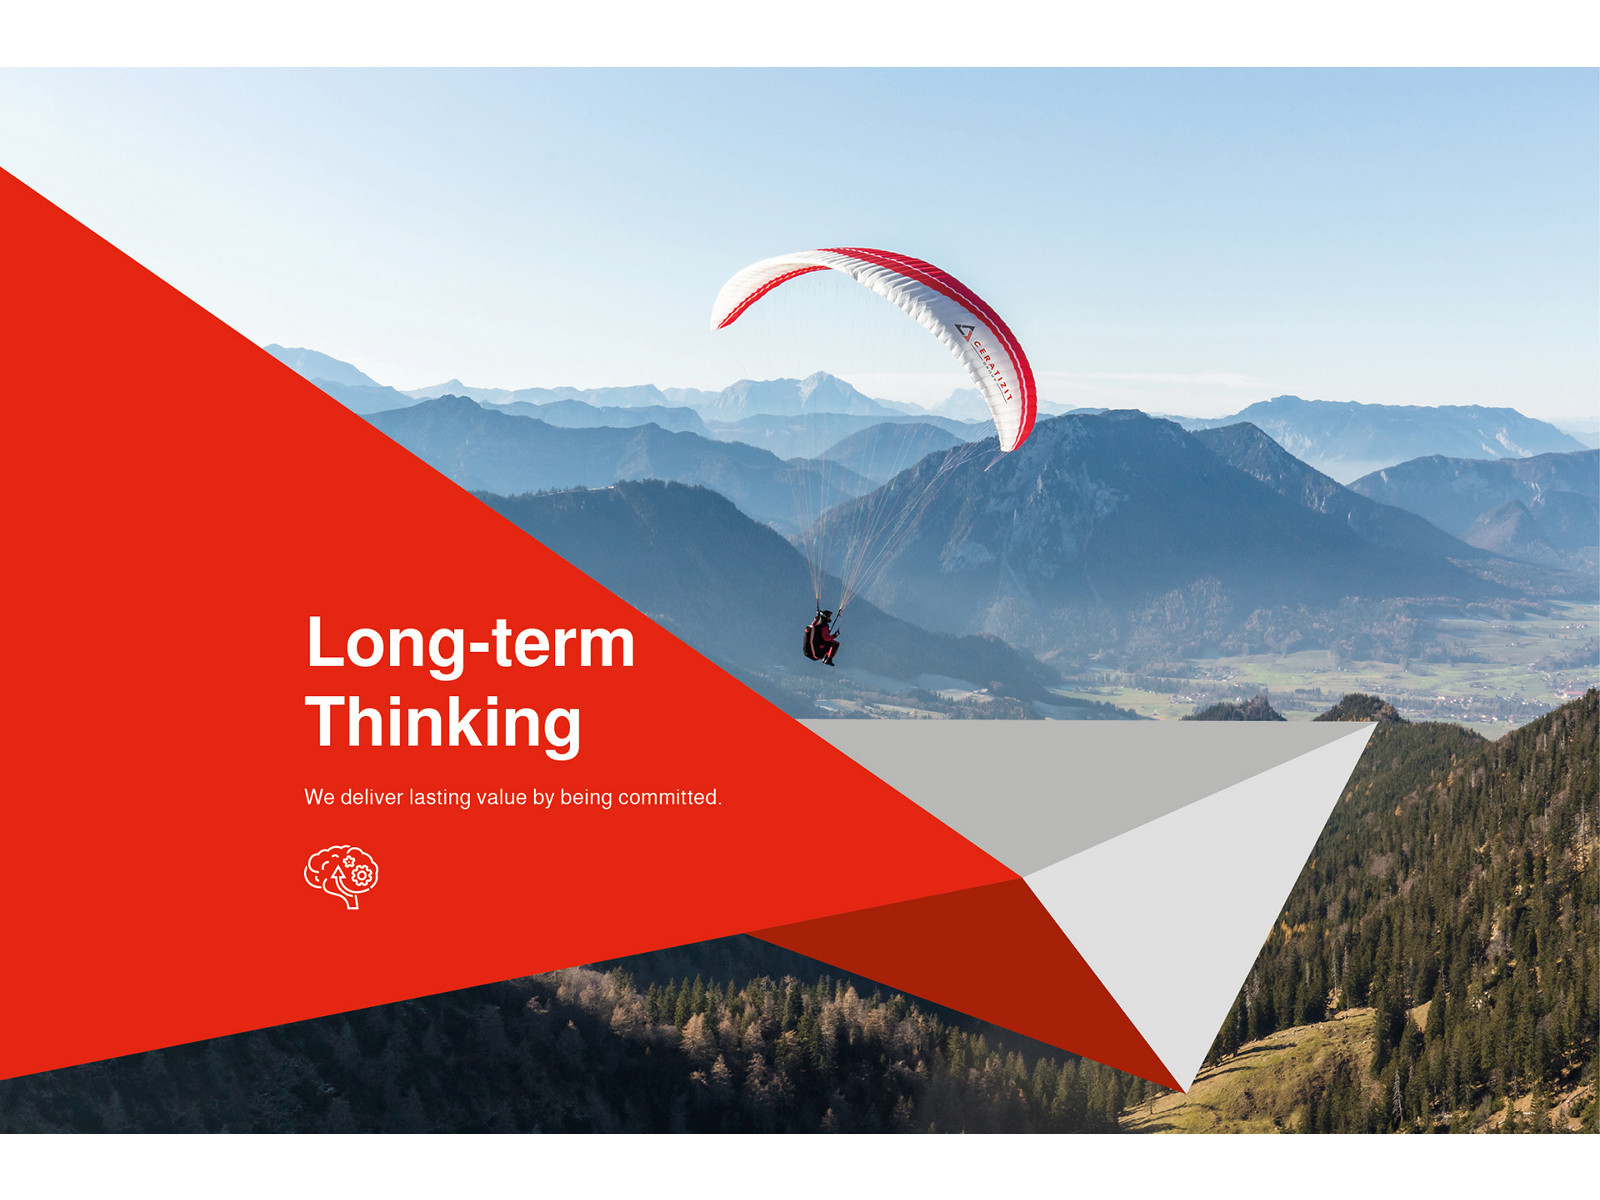 Long-term thinking